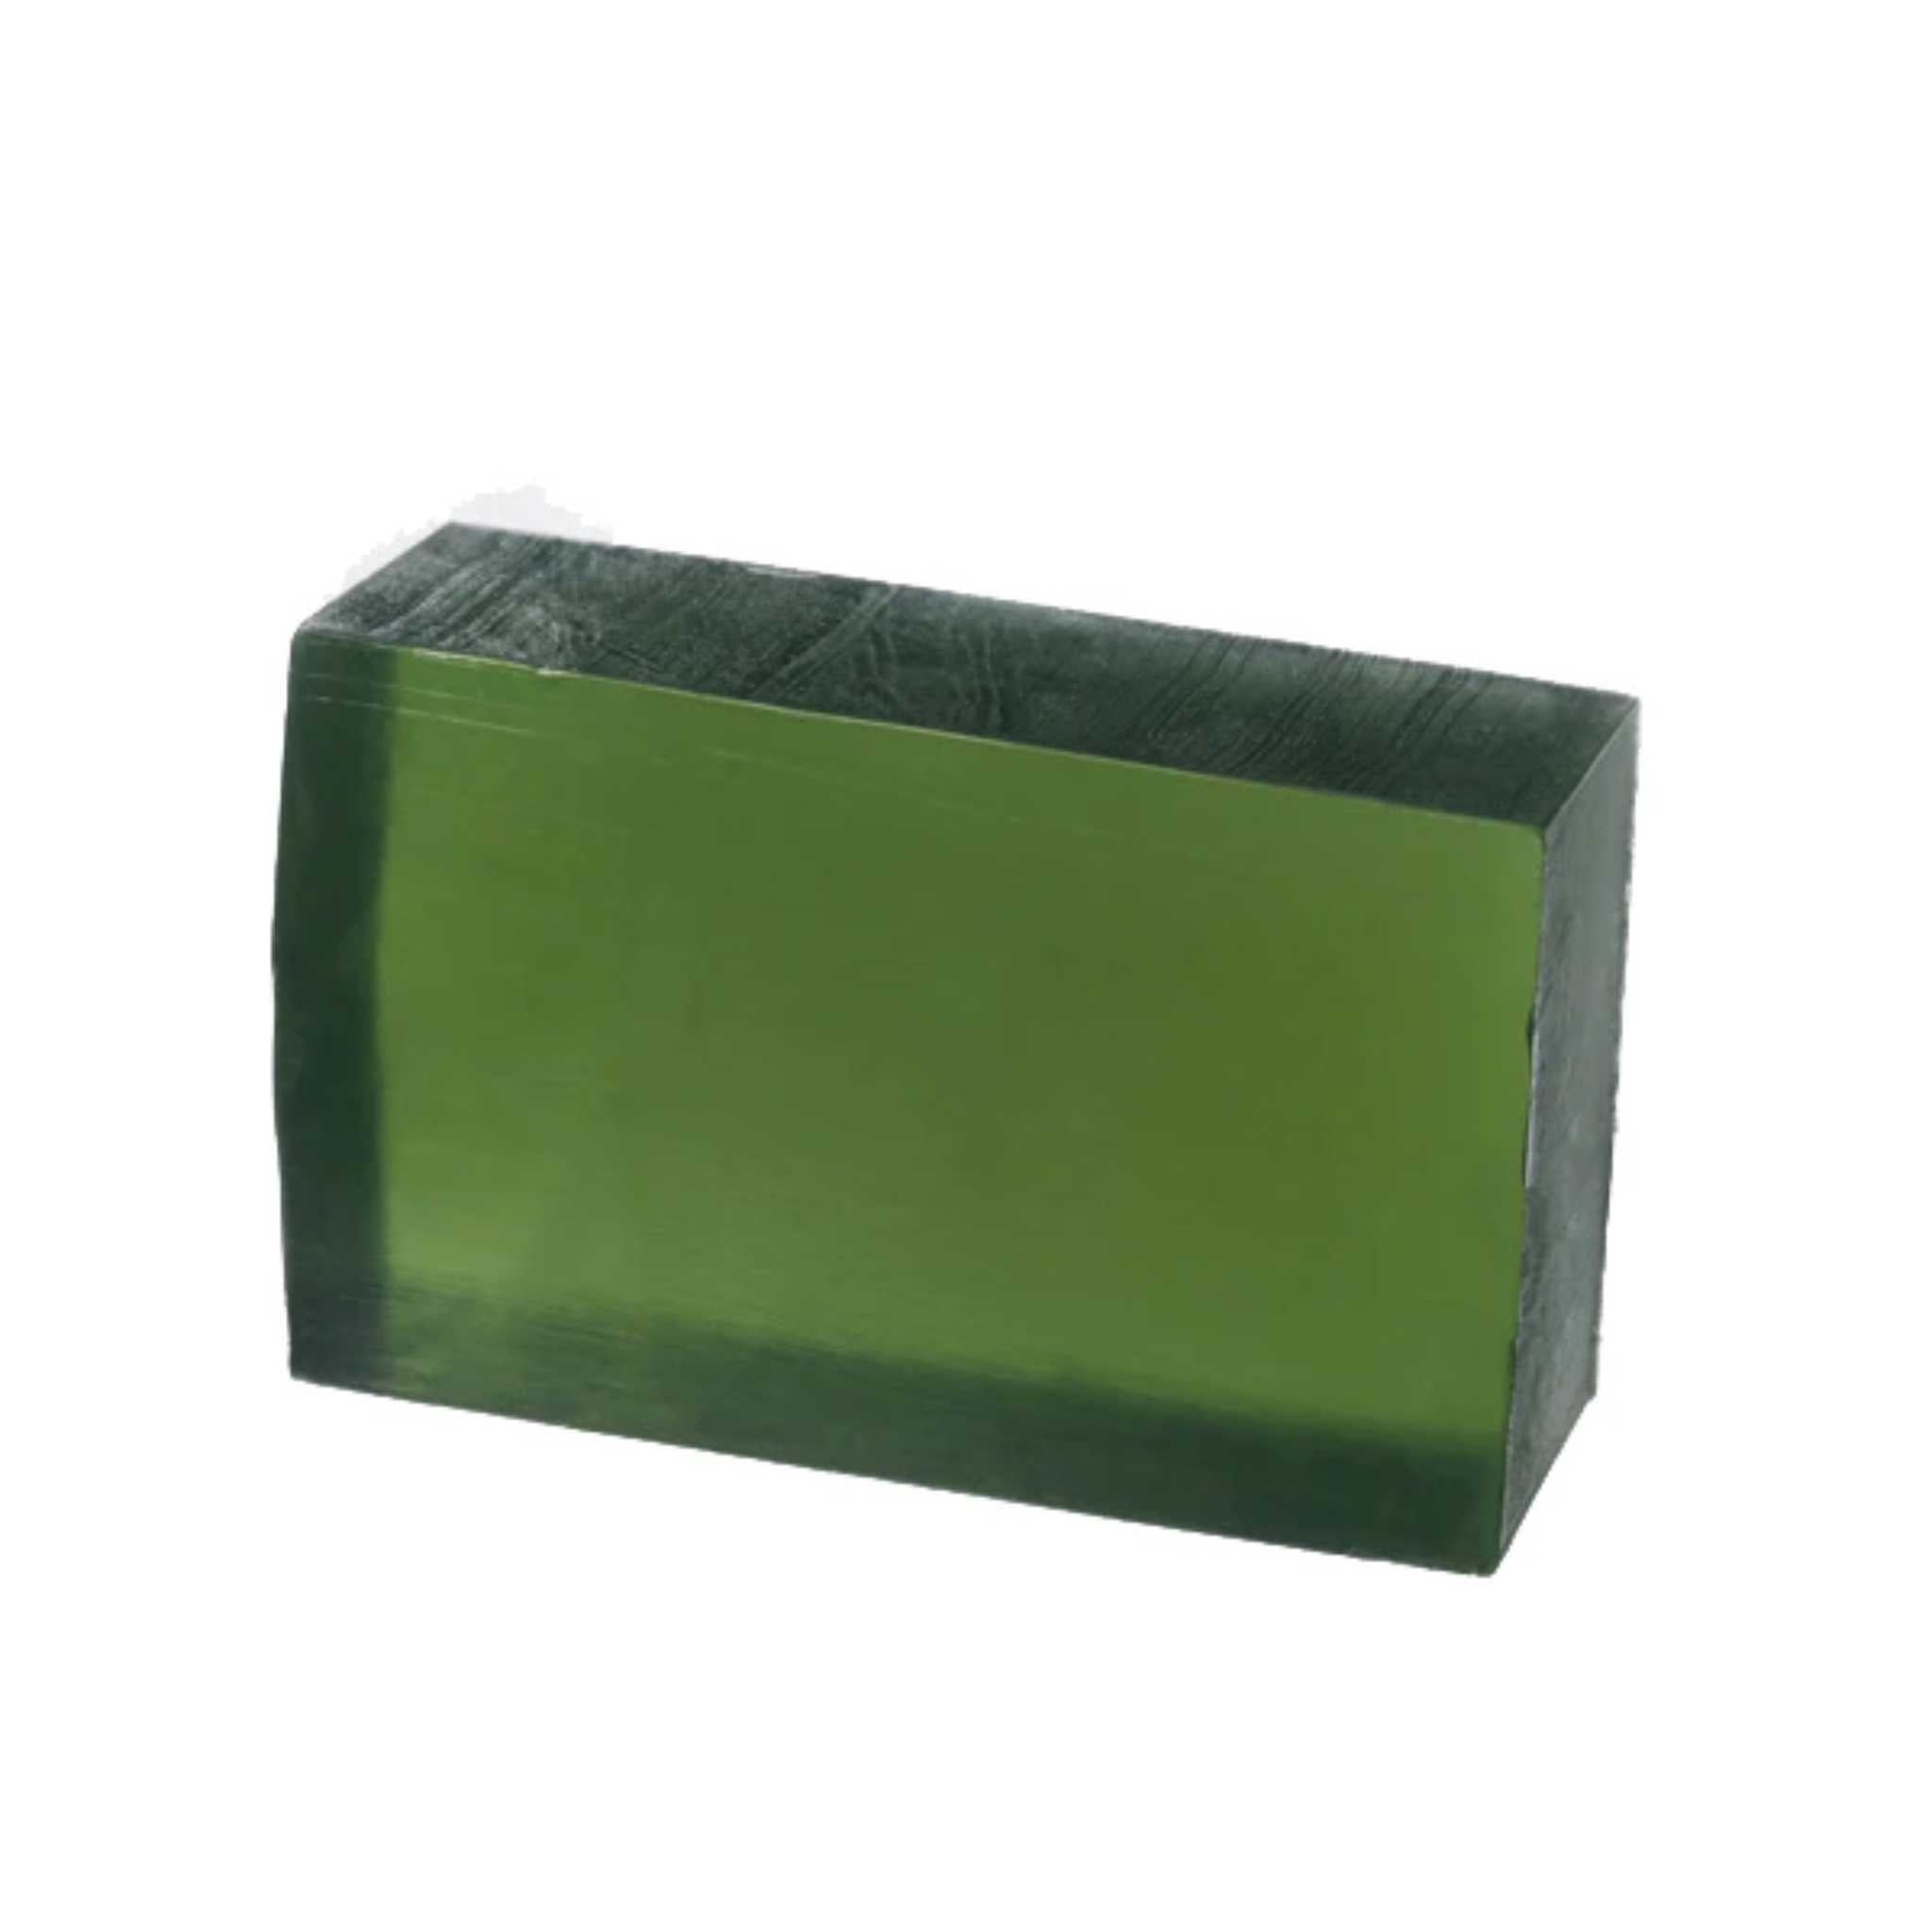 SAGAPO A Green Fish-Bone Shaped soap Shelf, Soft